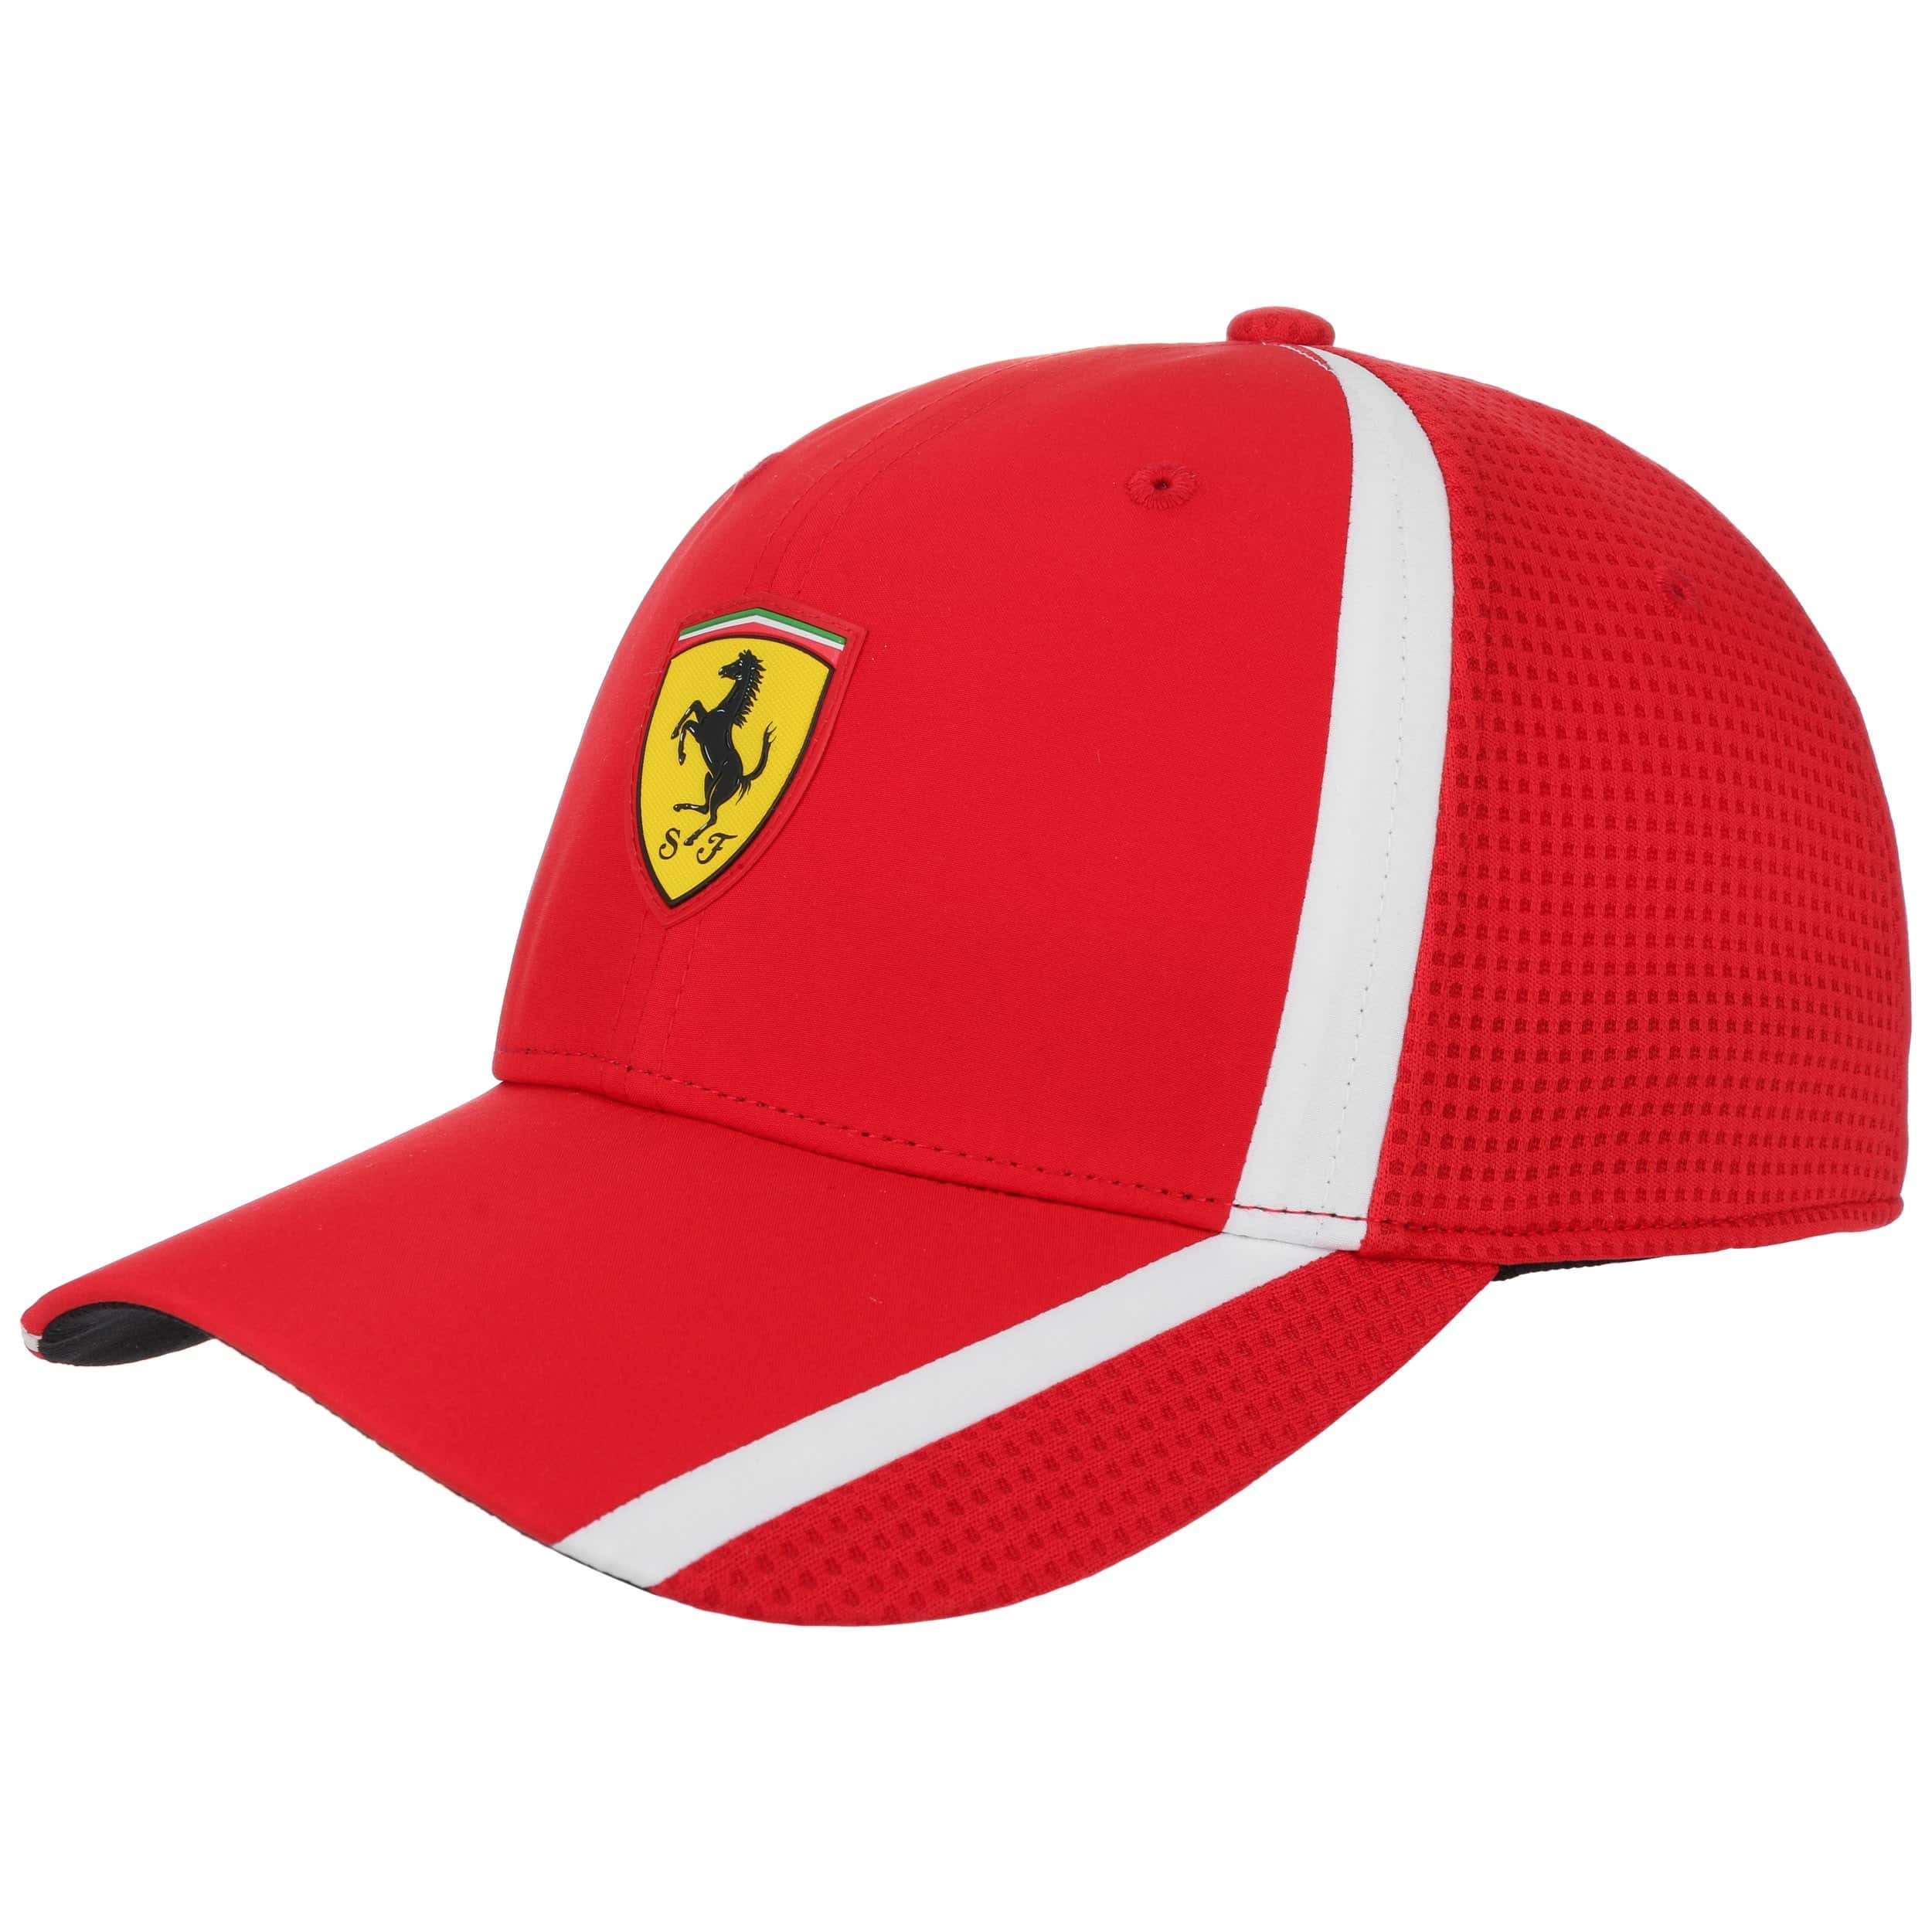 Ferrari Redline Strapback Cap by PUMA 